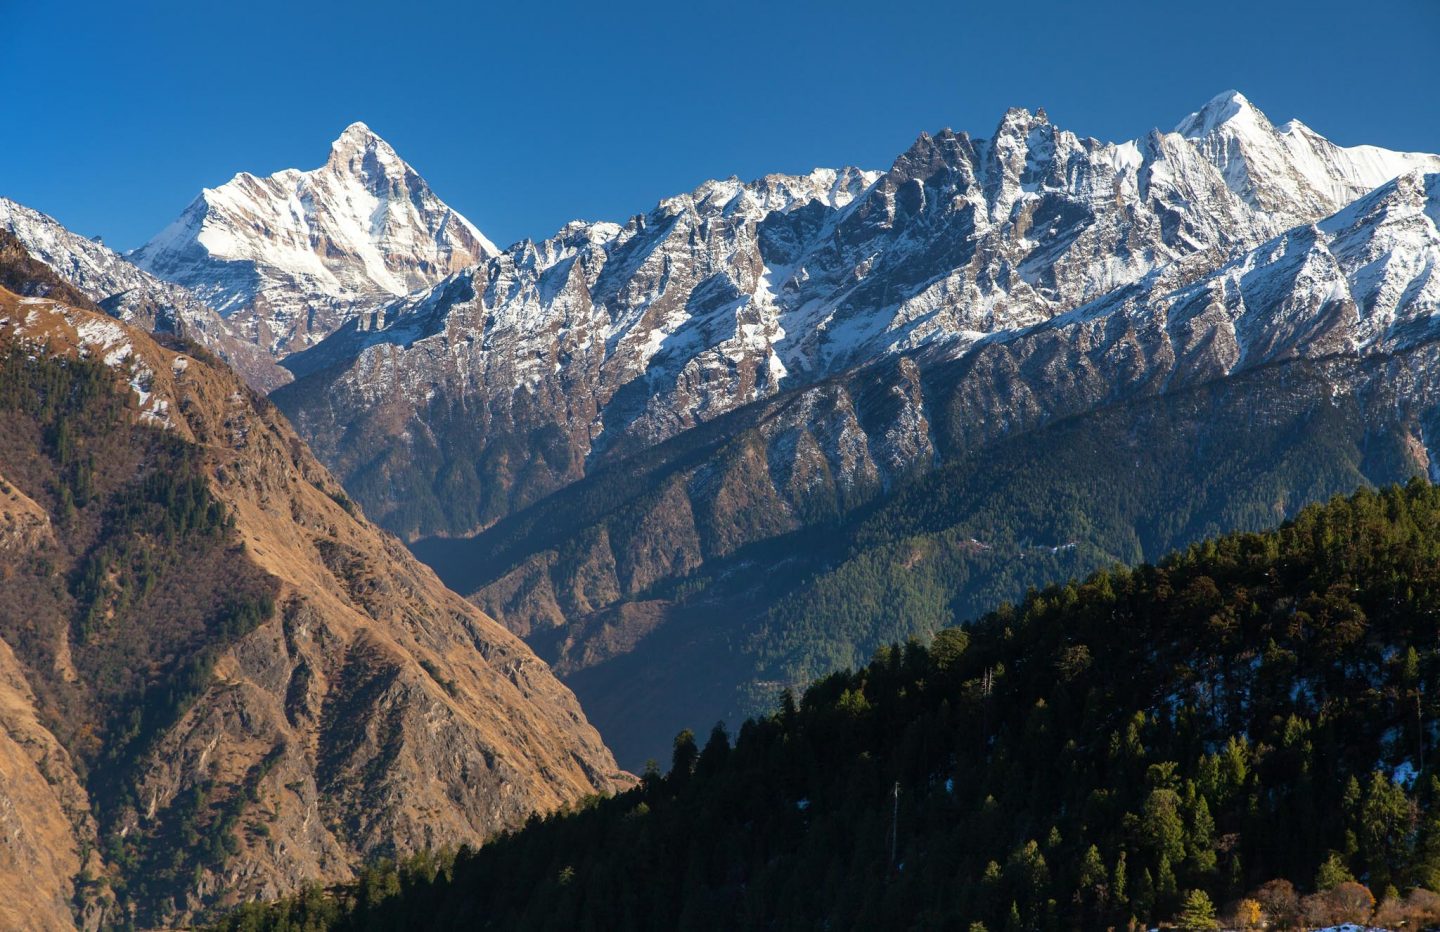 Nanda Devi | A well-rounded exploratory trek